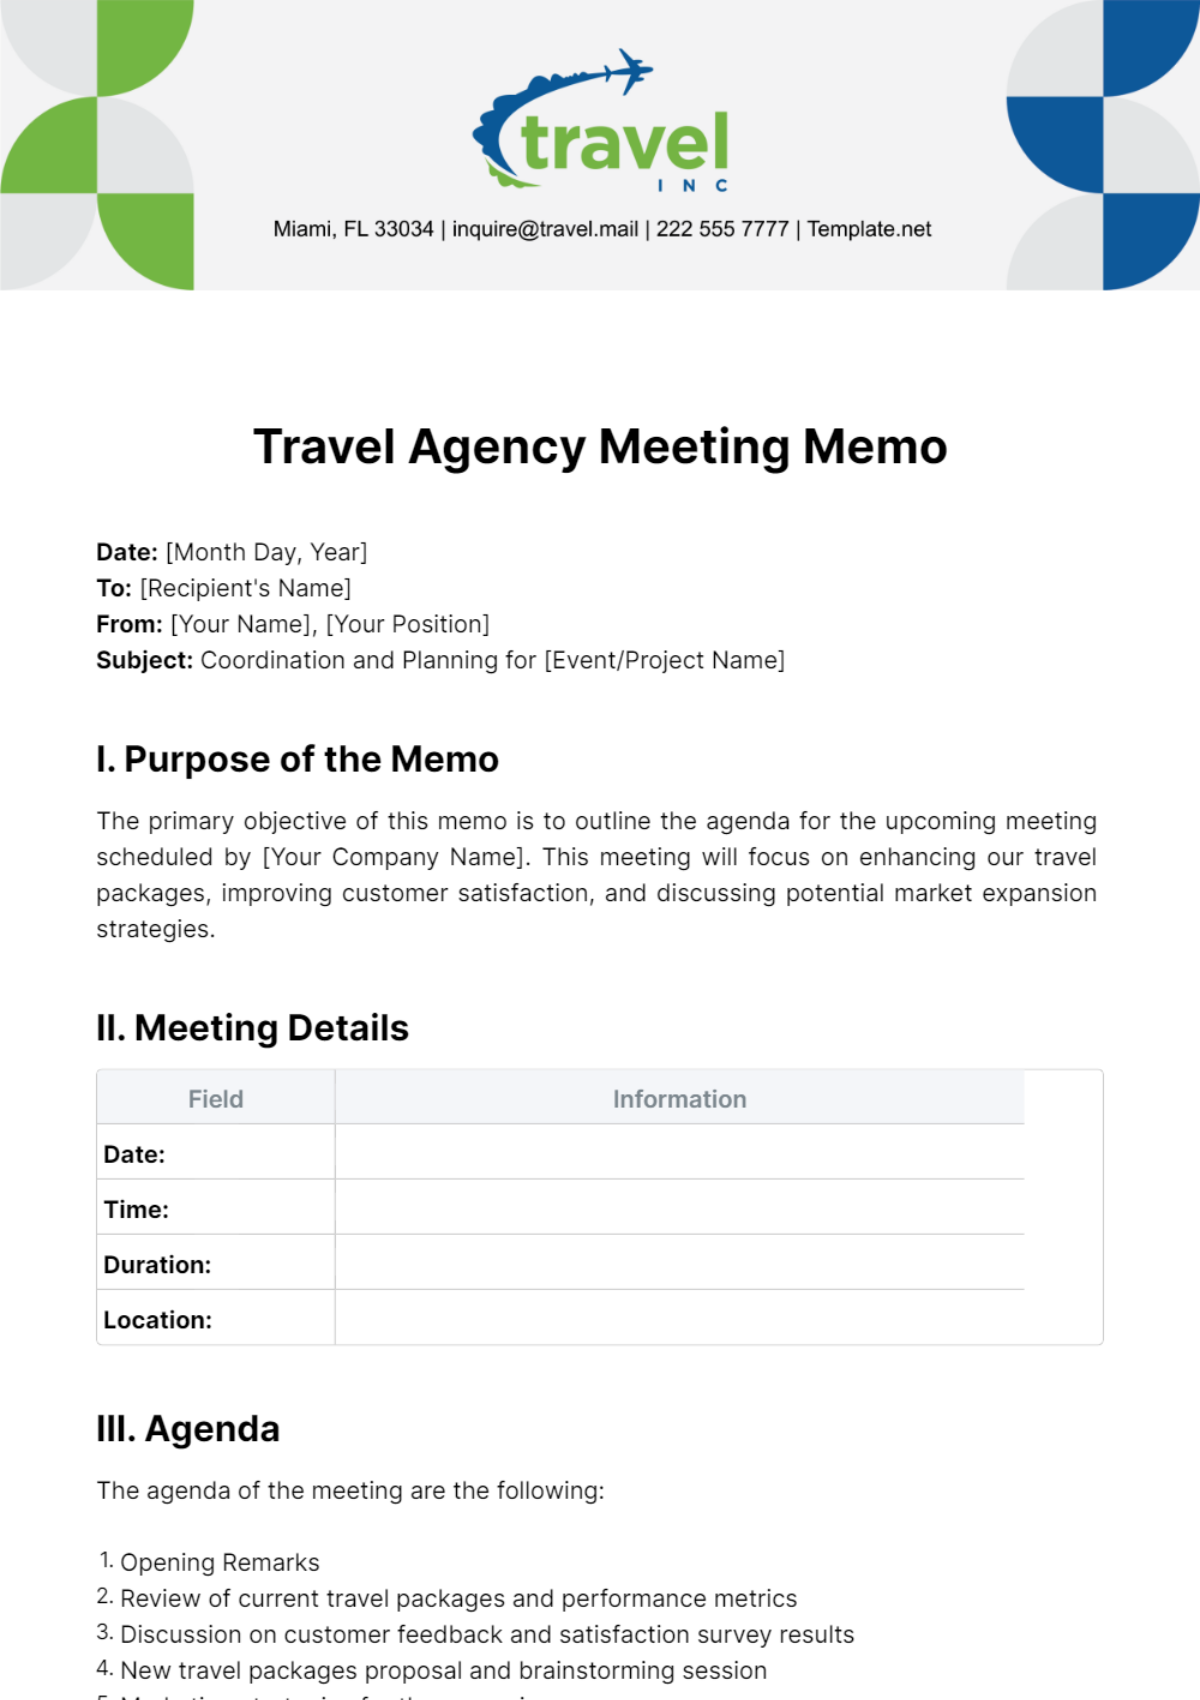 Free Travel Agency Meeting Memo Template